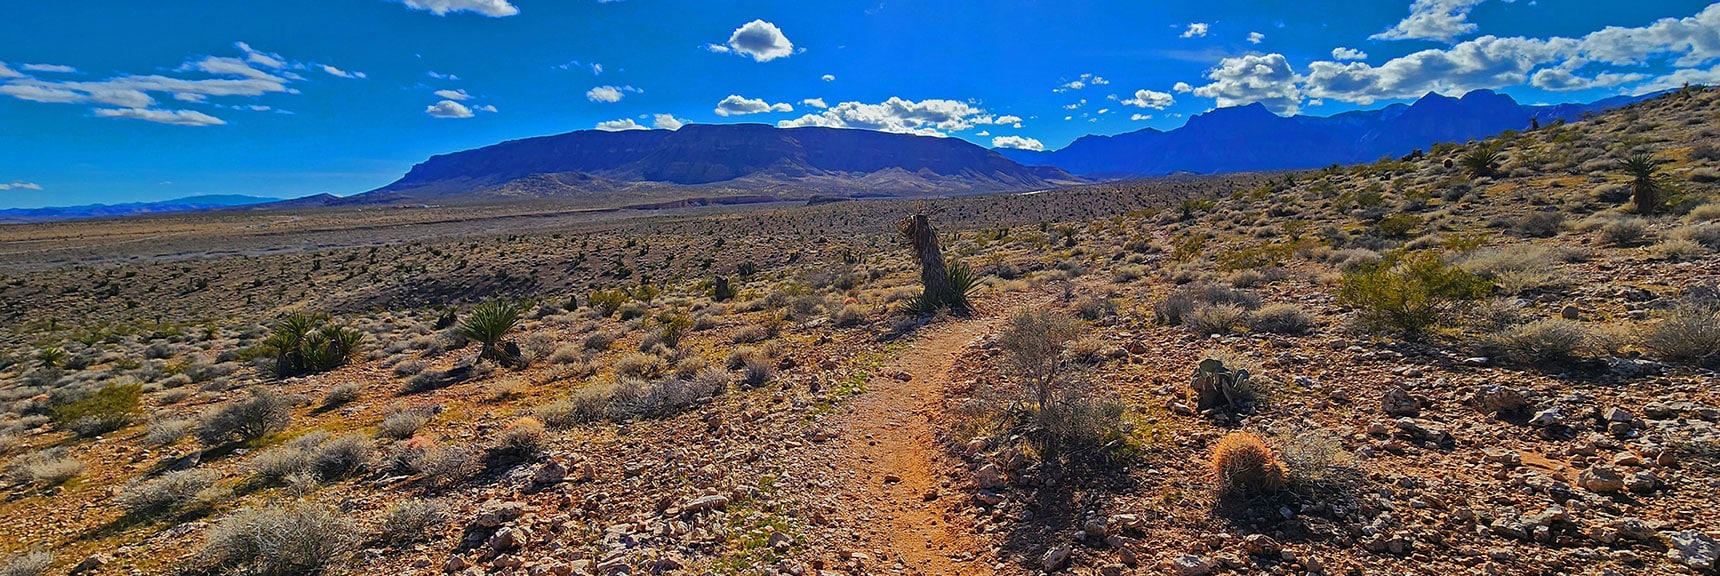 Continue on Half Wilson Trail Aiming Toward Blue Diamond Hill and Rainbow Mts. | Calico Basin Daily Workout Trails | Calico Basin, Nevada